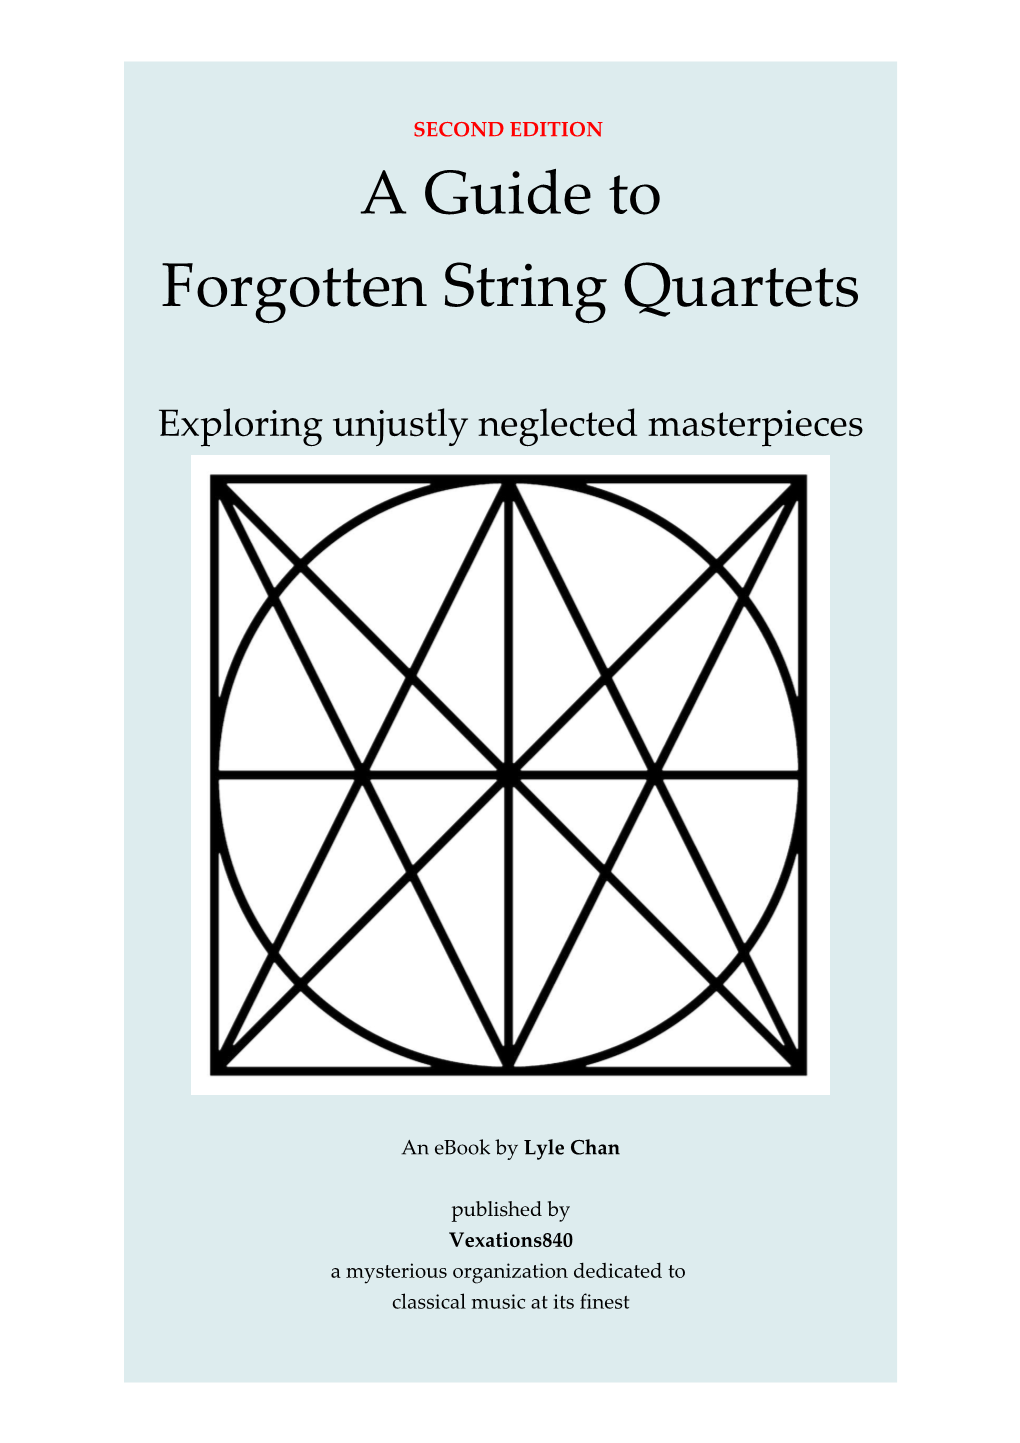 A Guide to Forgotten String Quartets